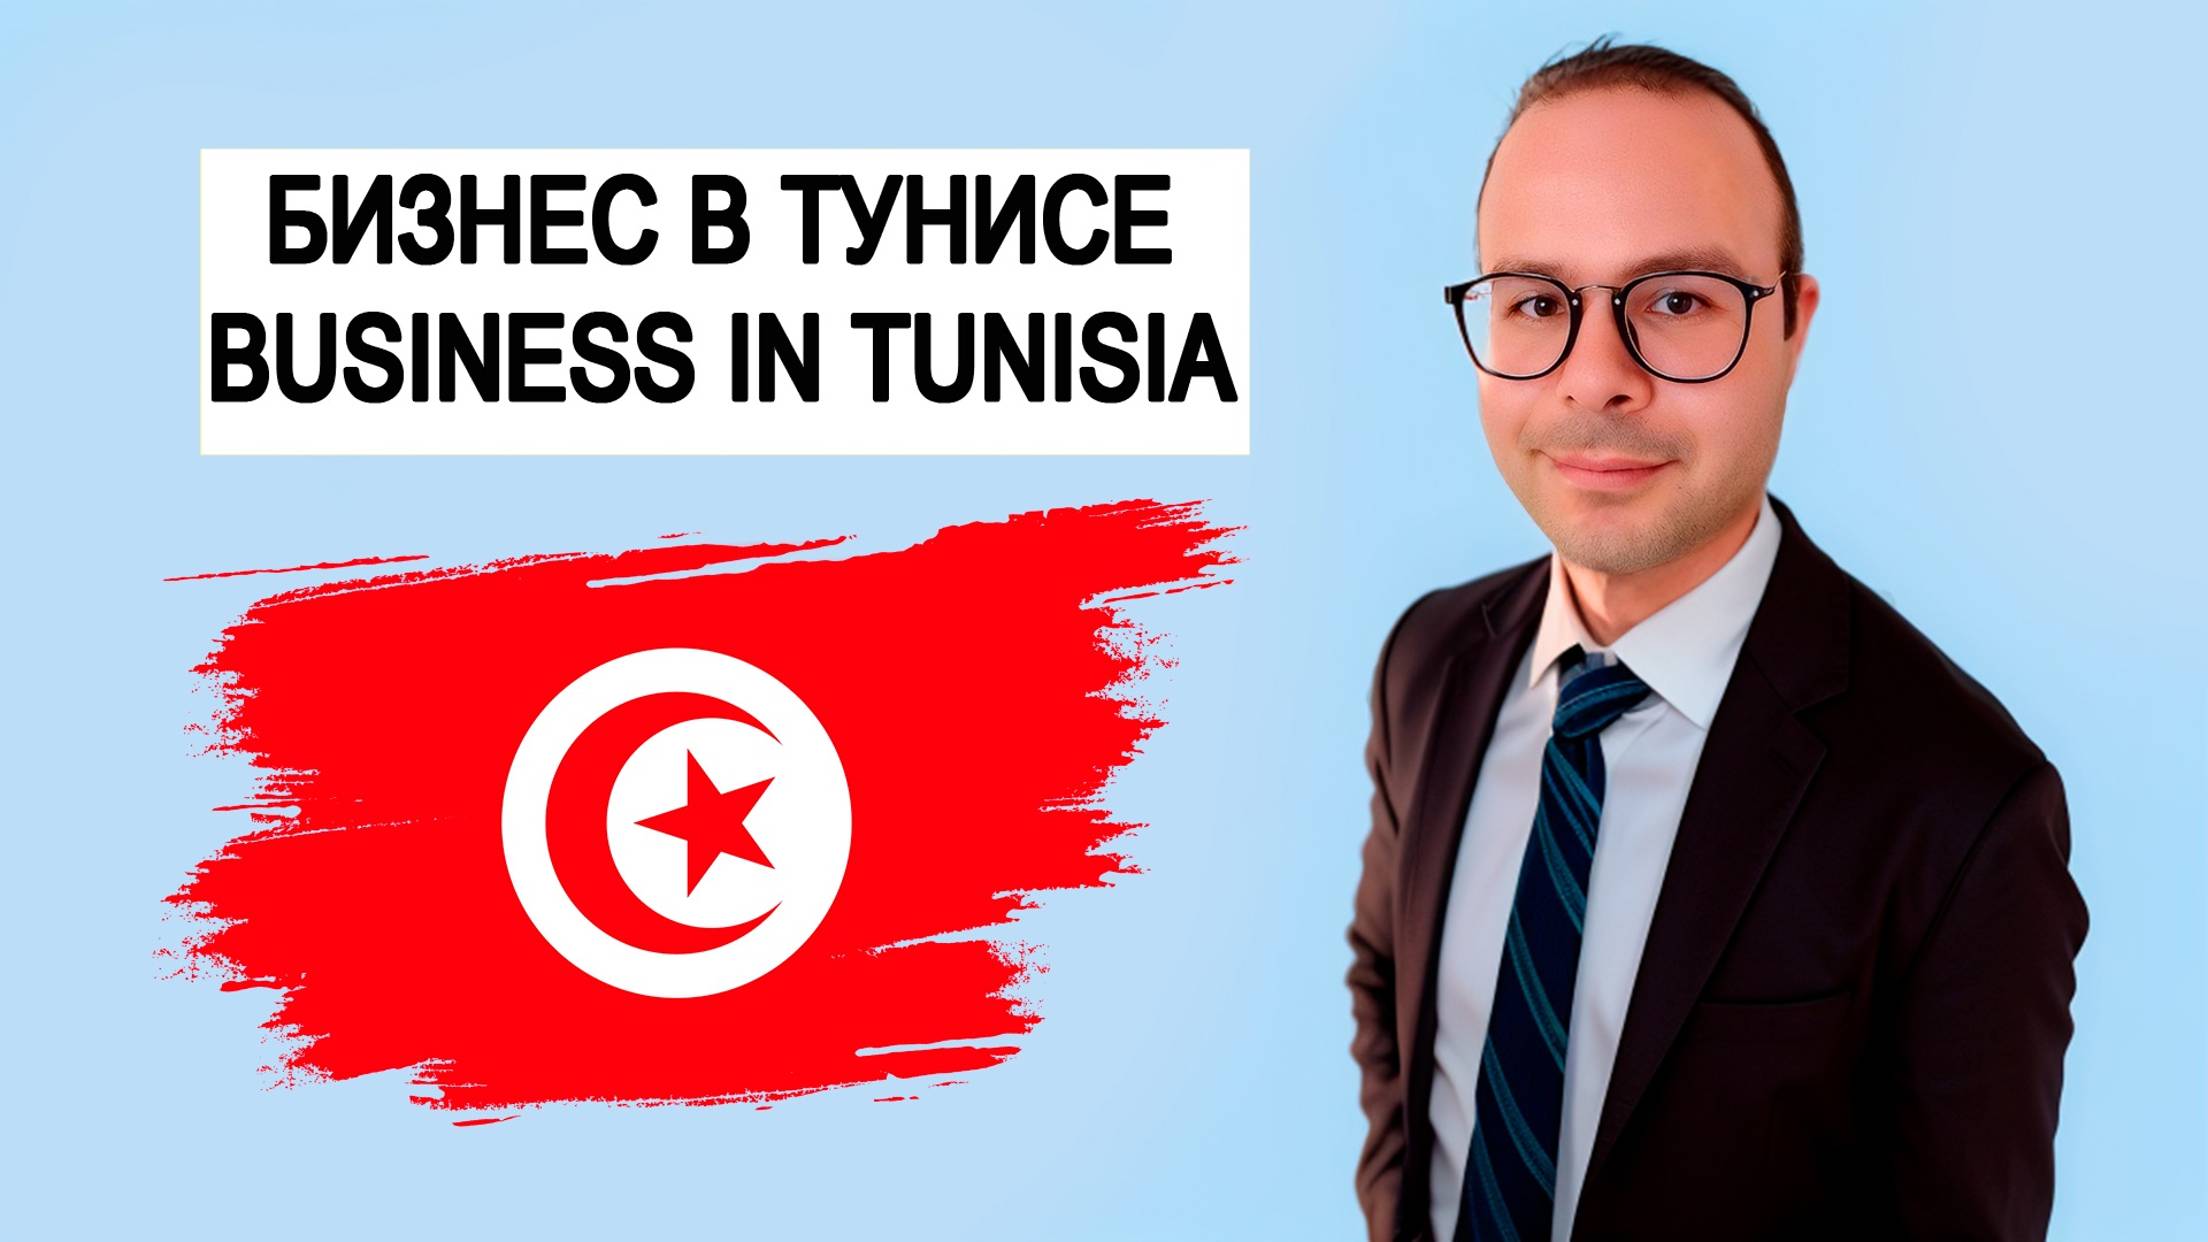 ТУНИС. Регистрация компании. Бизнес. Открытие расчётного счёта. Tunisia. Lawyer. Belhassen Ennouri